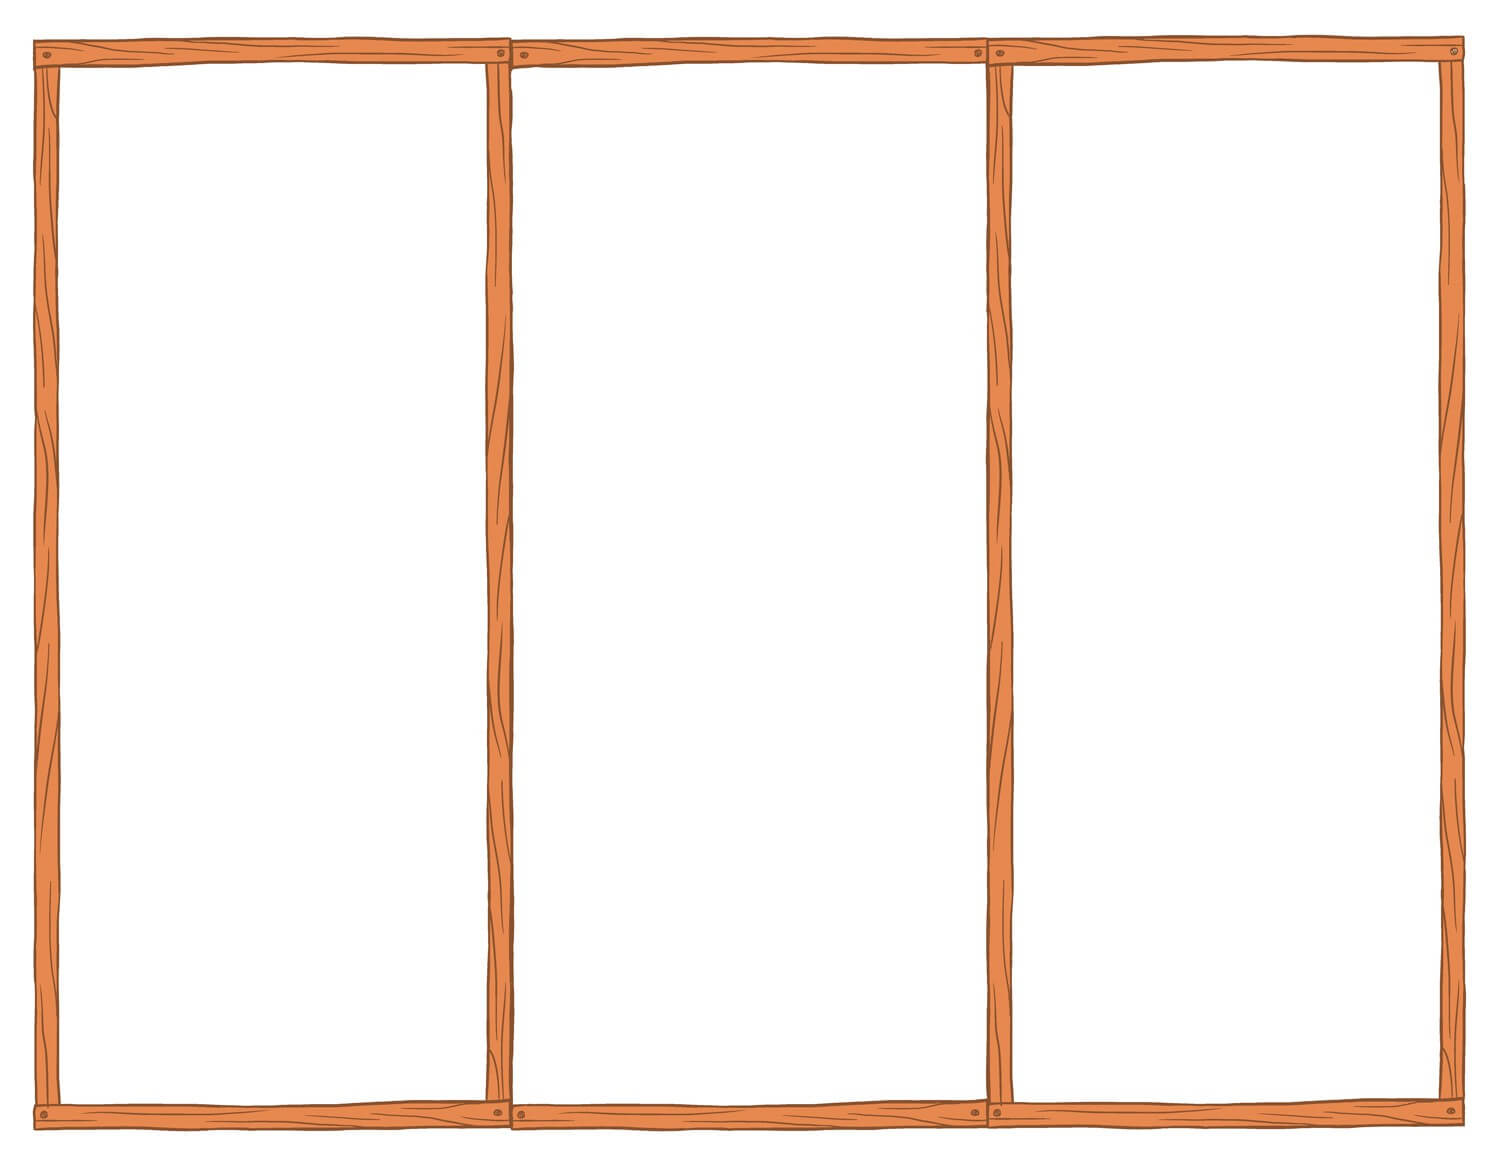 14 Blank Tri Fold Brochure Template Word Images – Free Blank Inside Free Tri Fold Brochure Templates Microsoft Word